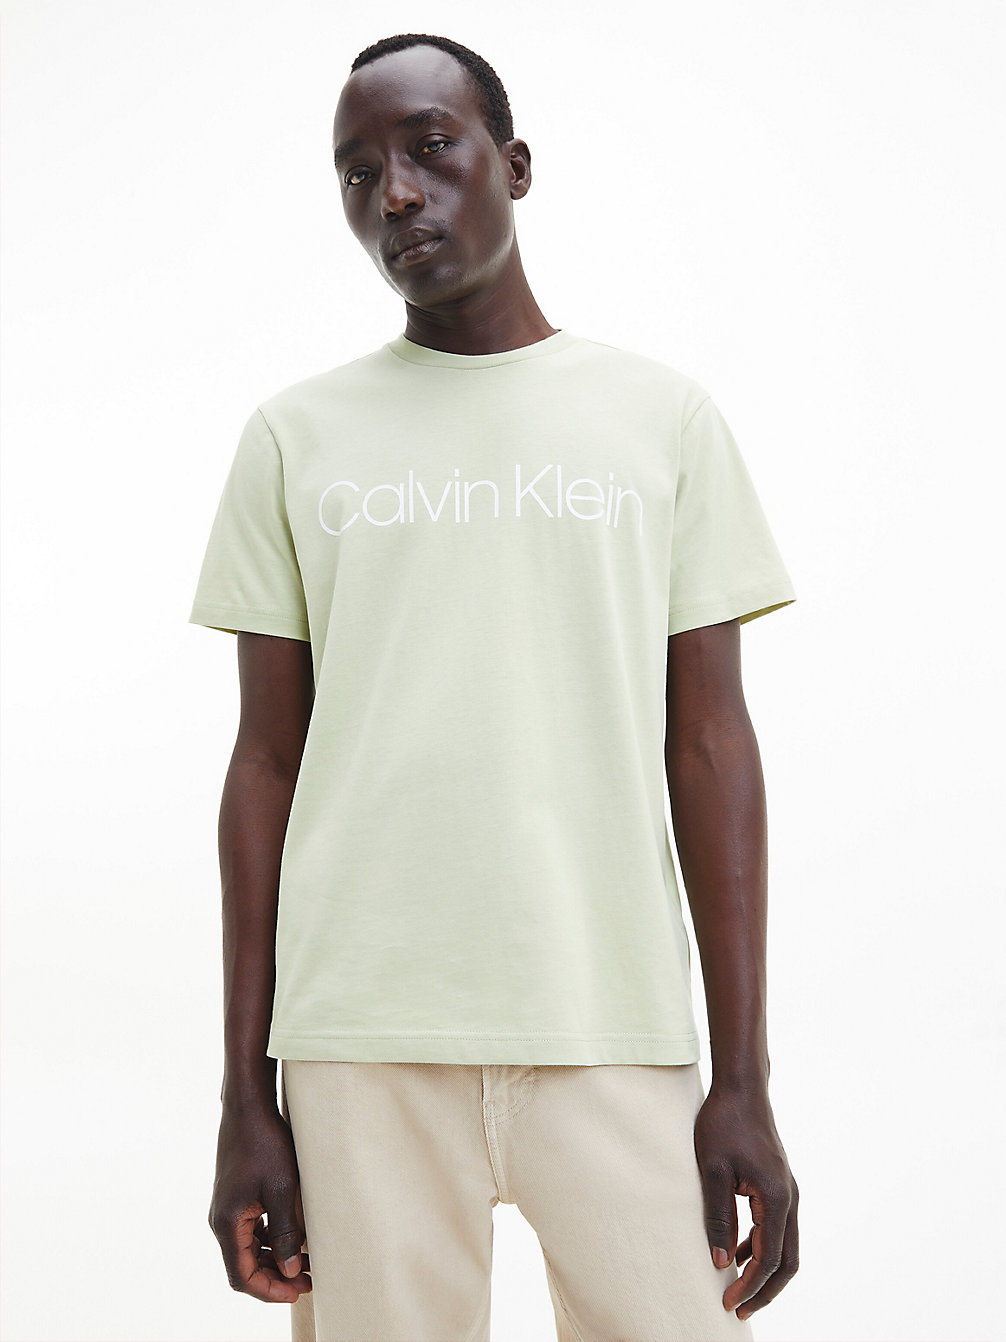 HERB TEA T-Shirt En Coton Bio Avec Logo undefined hommes Calvin Klein